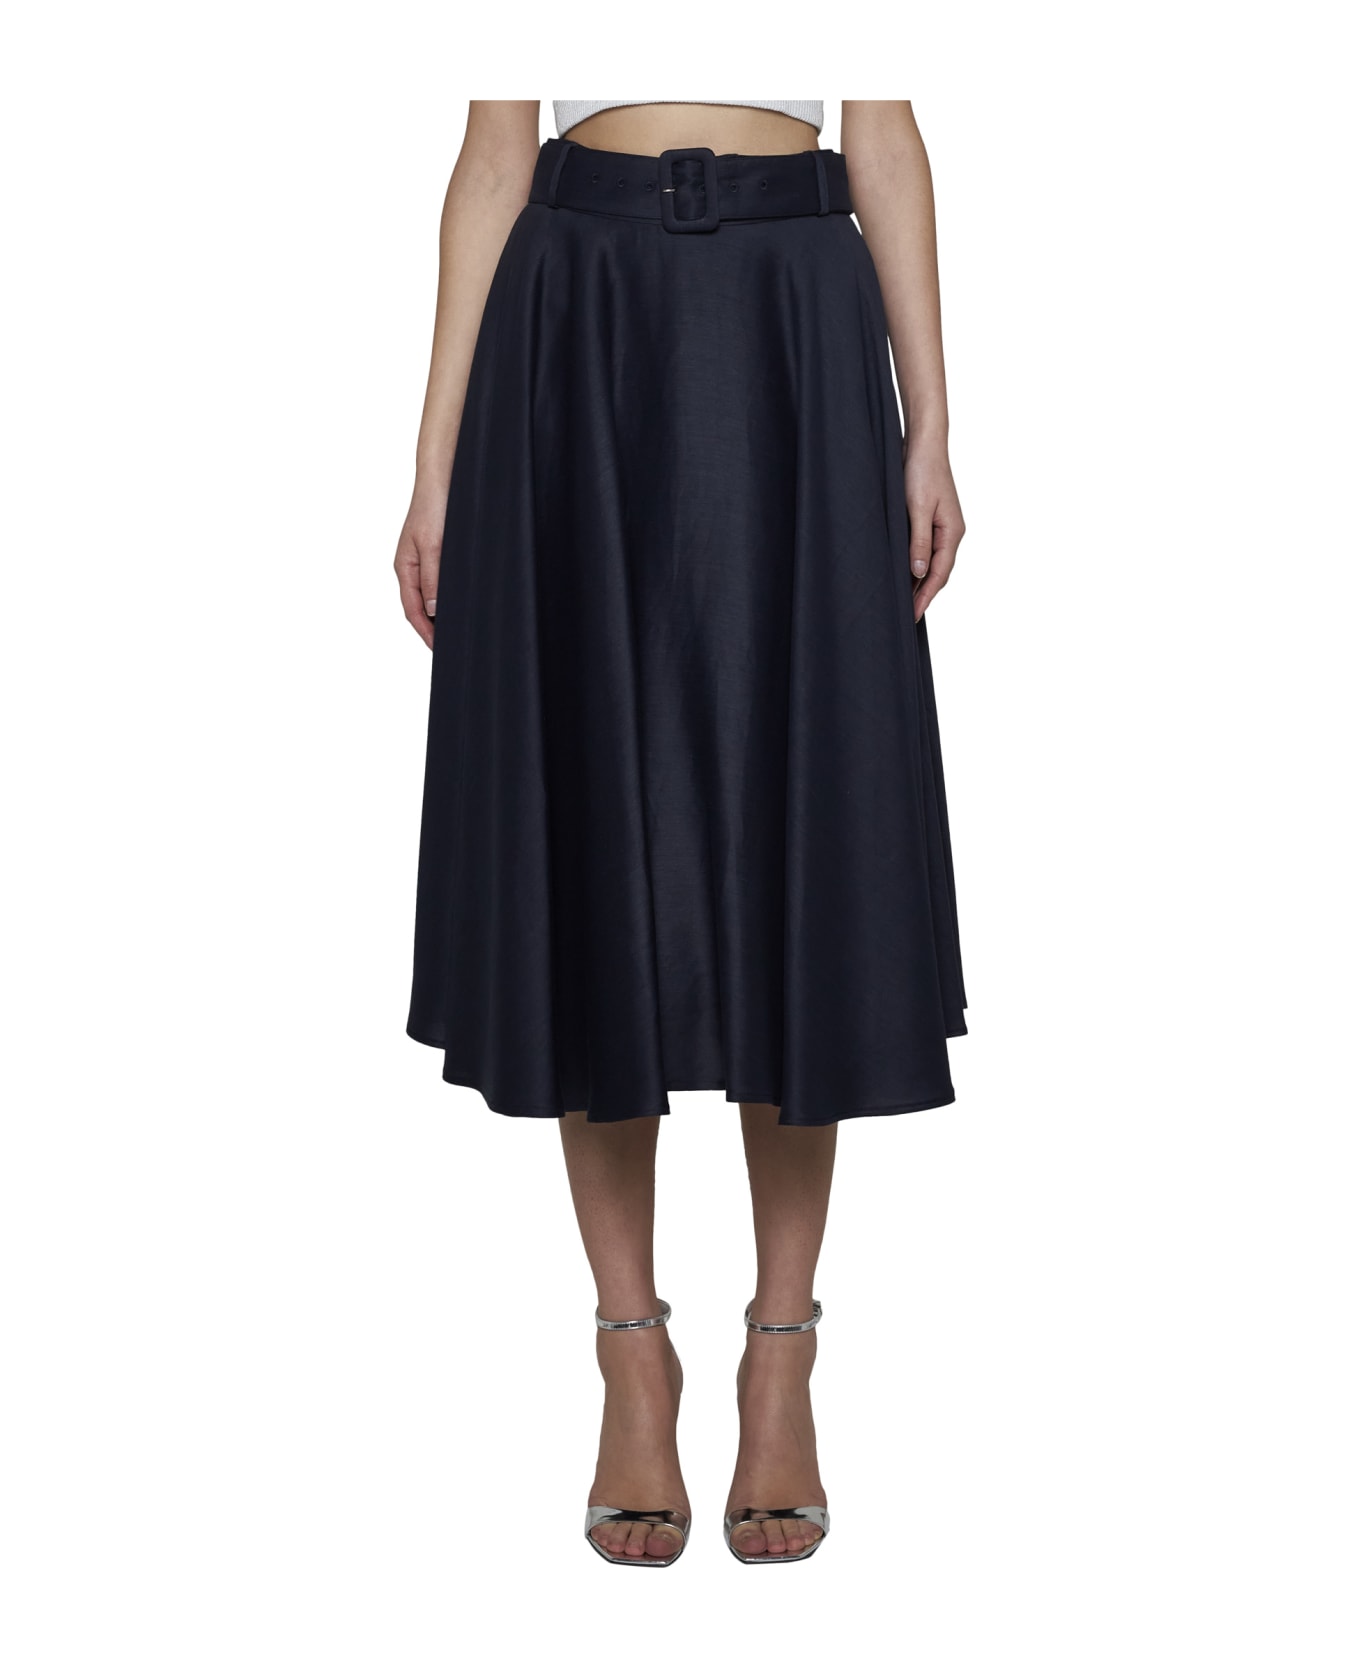 Lardini Skirt - Blu スカート